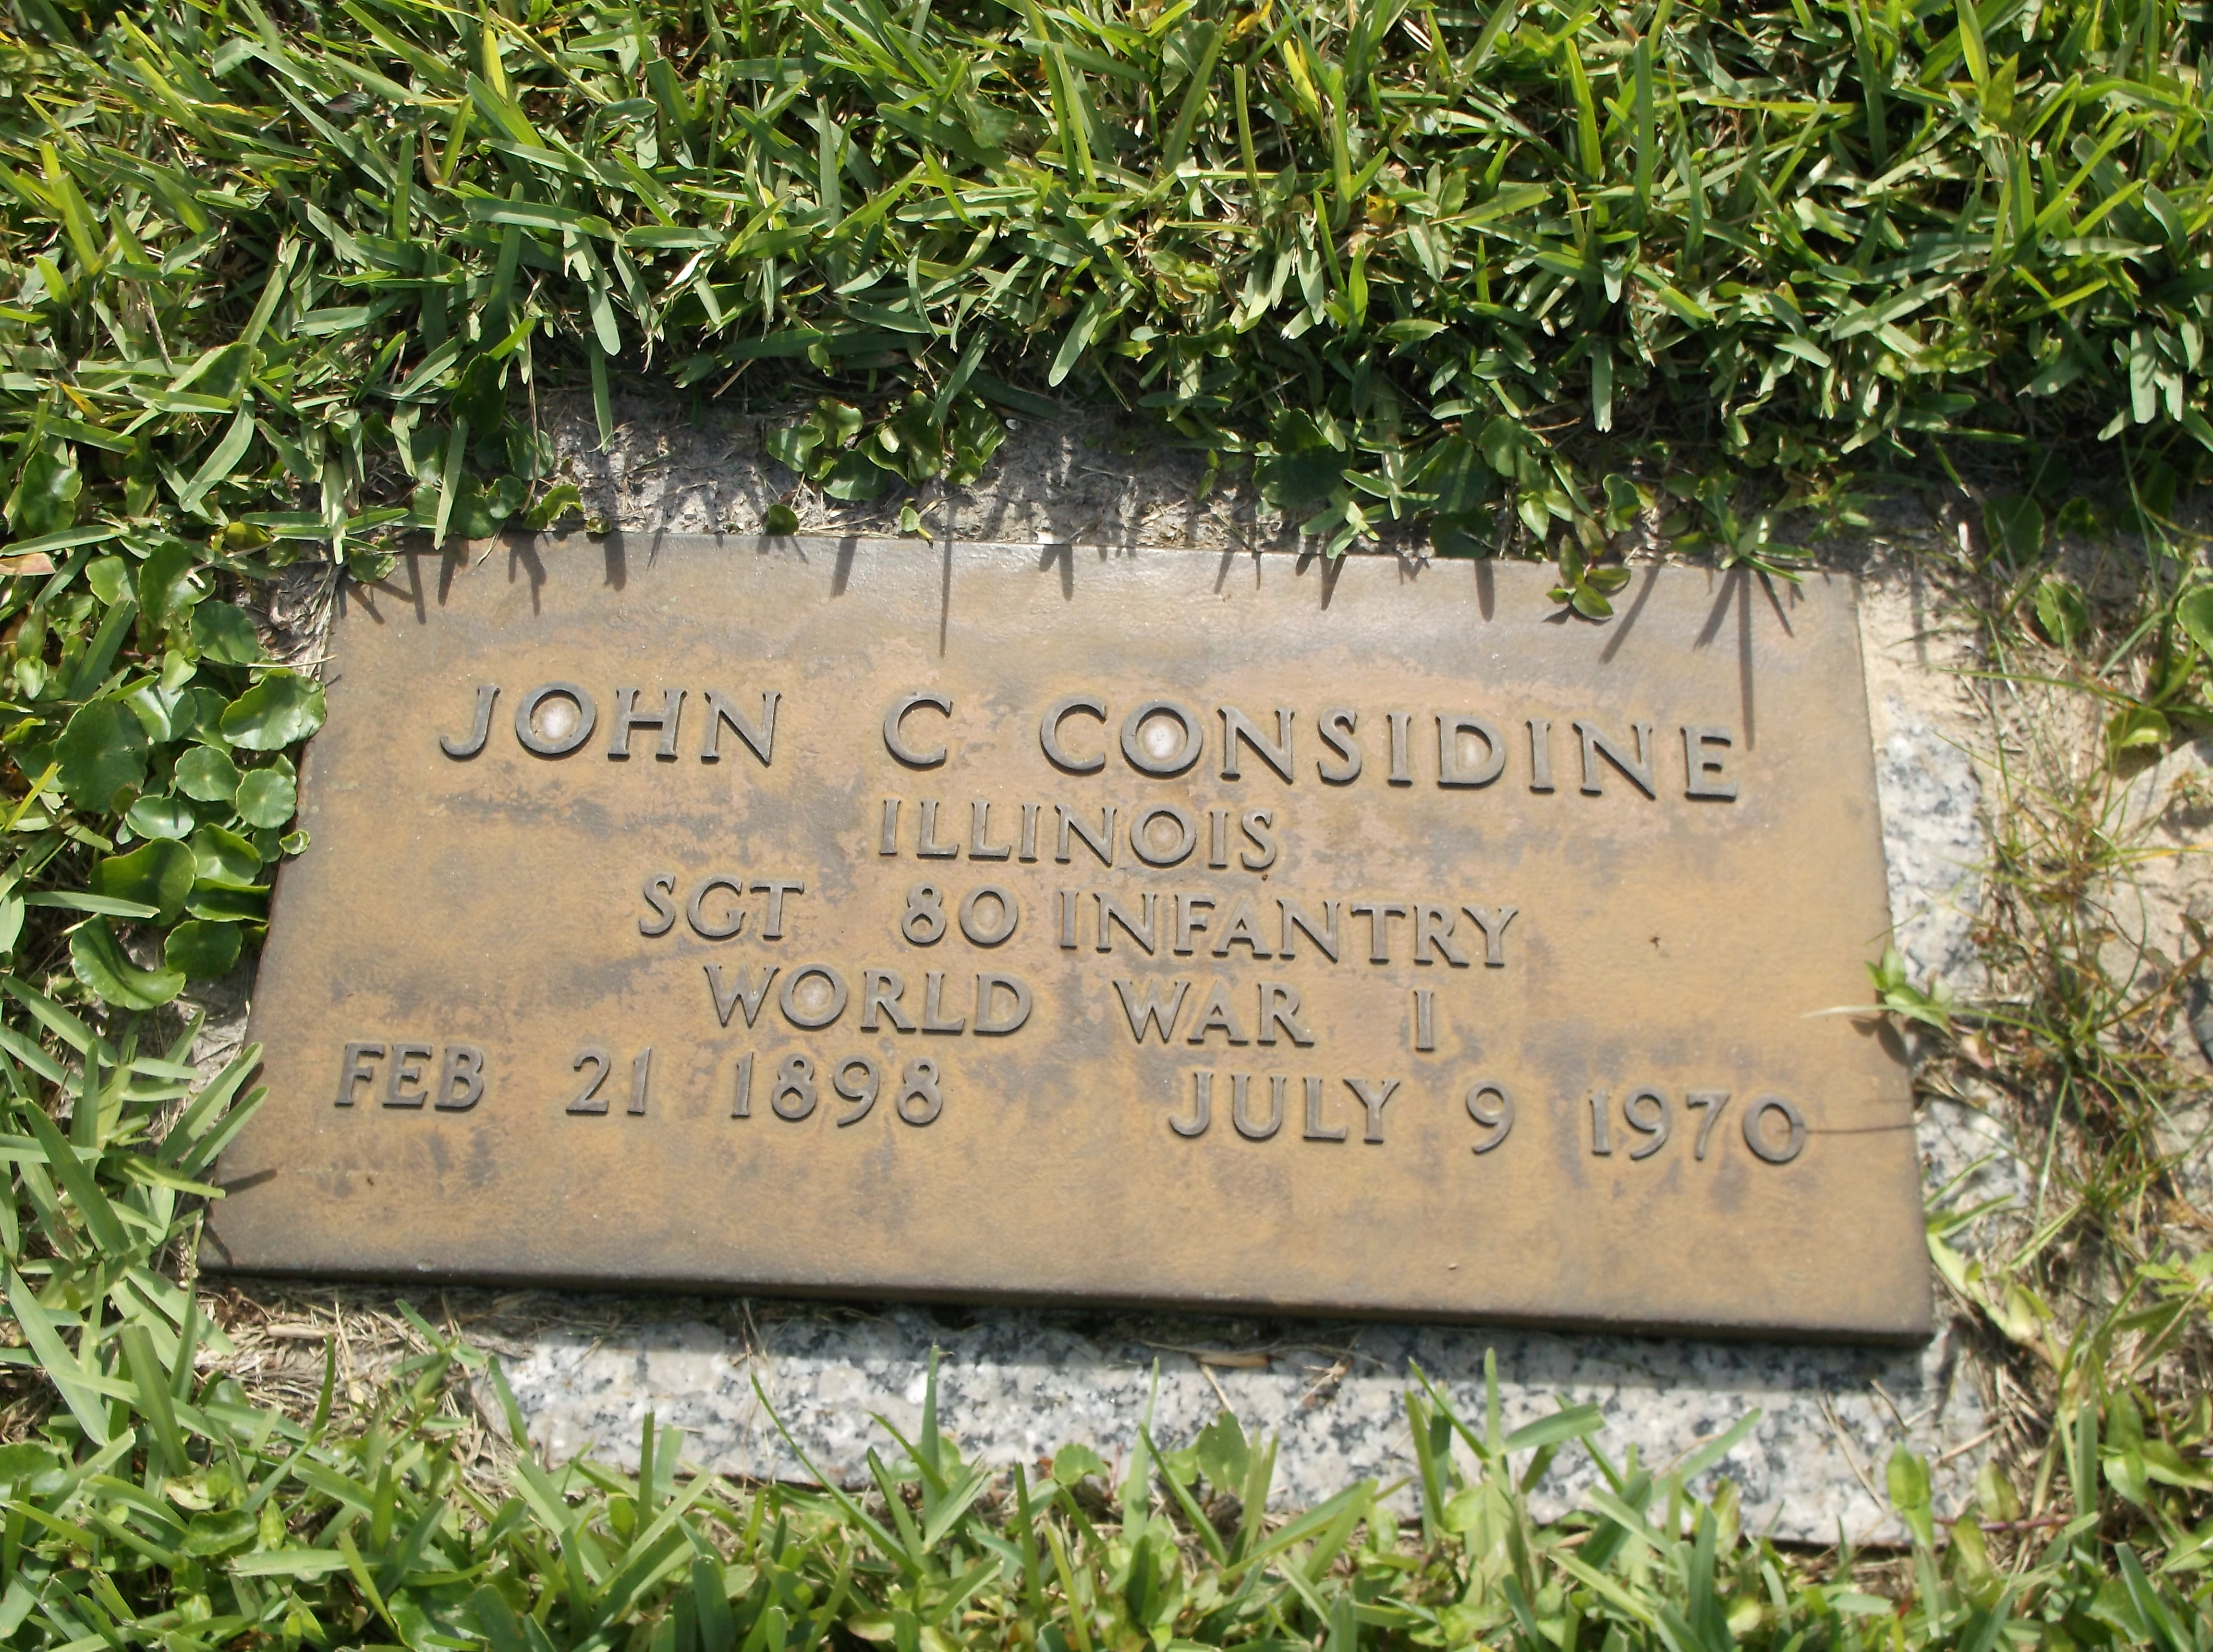 John C Considine